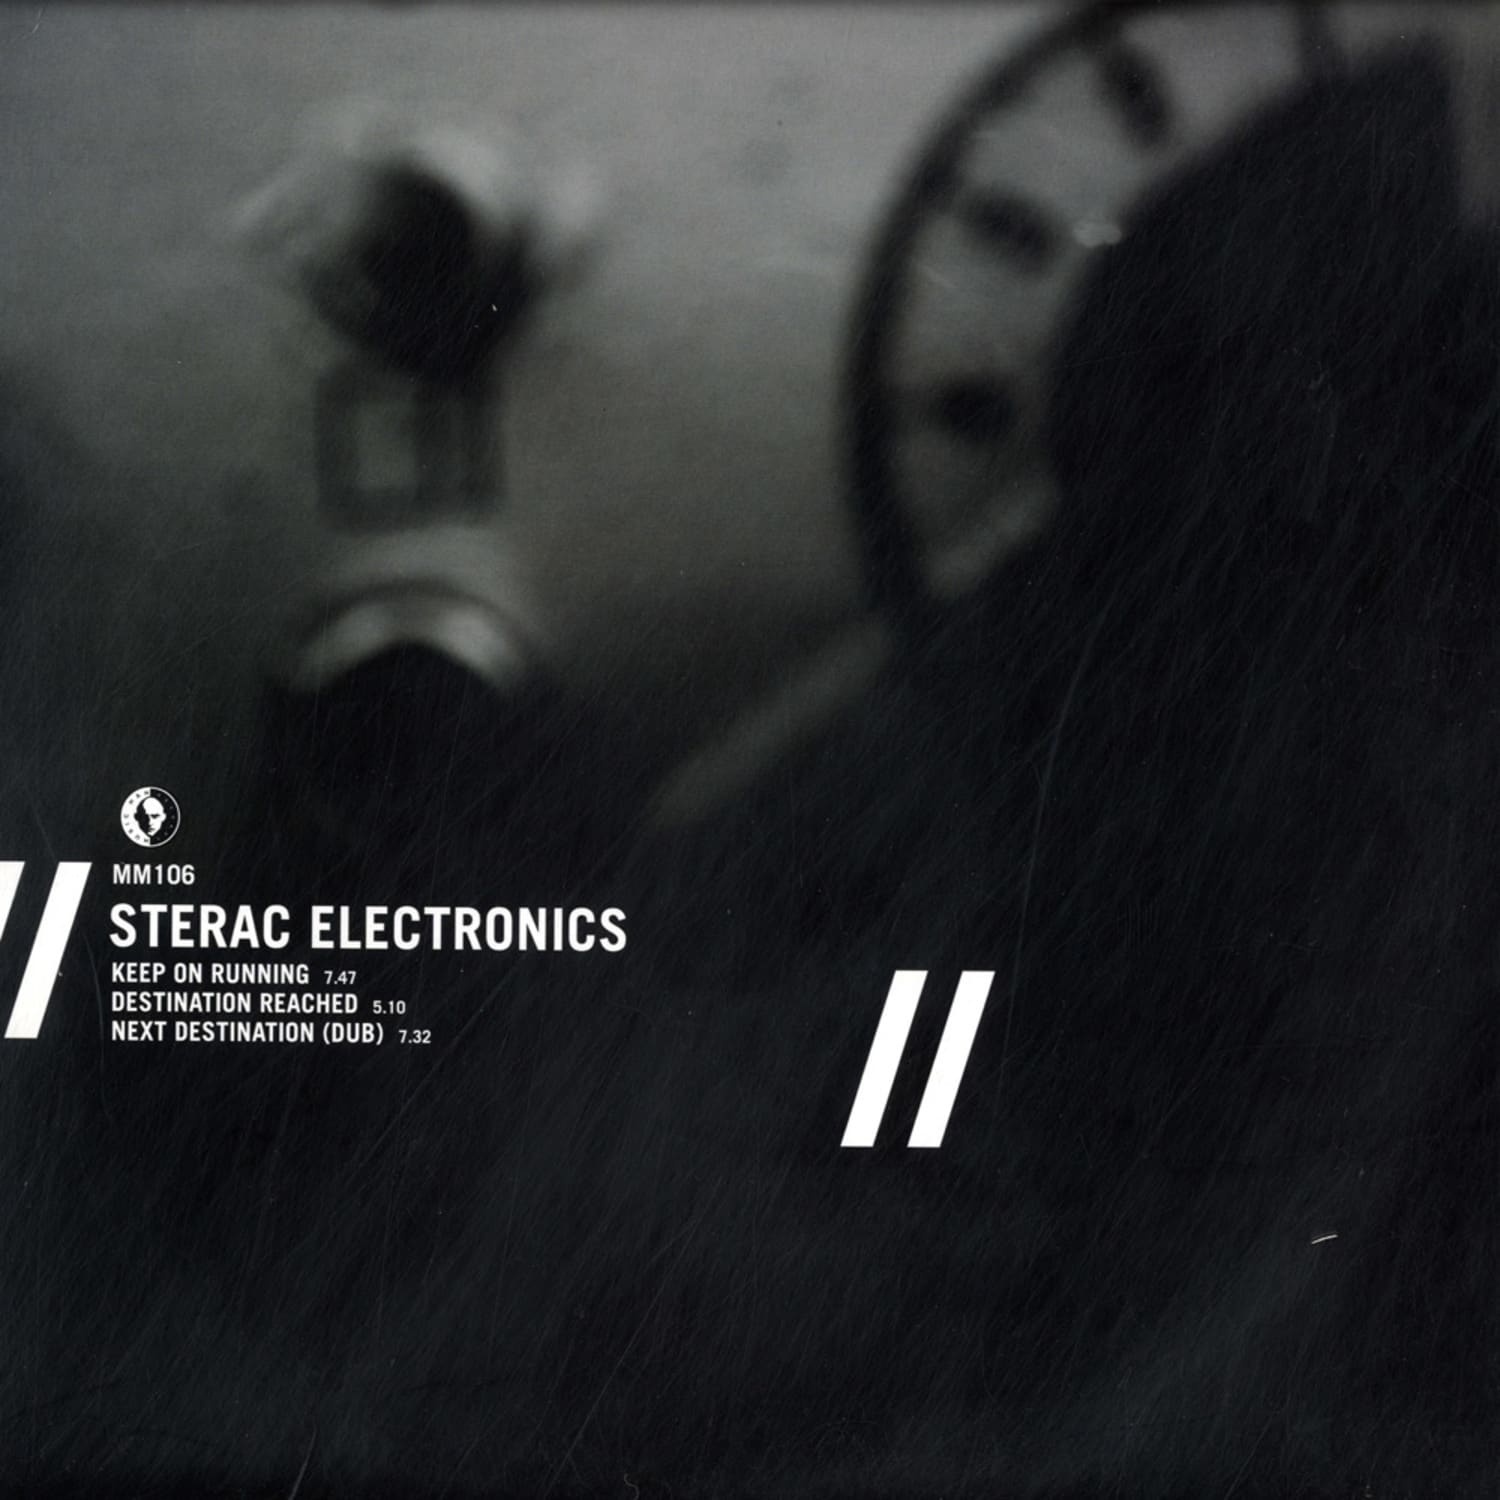 Sterac Electonics - KEEP ON RUNNING